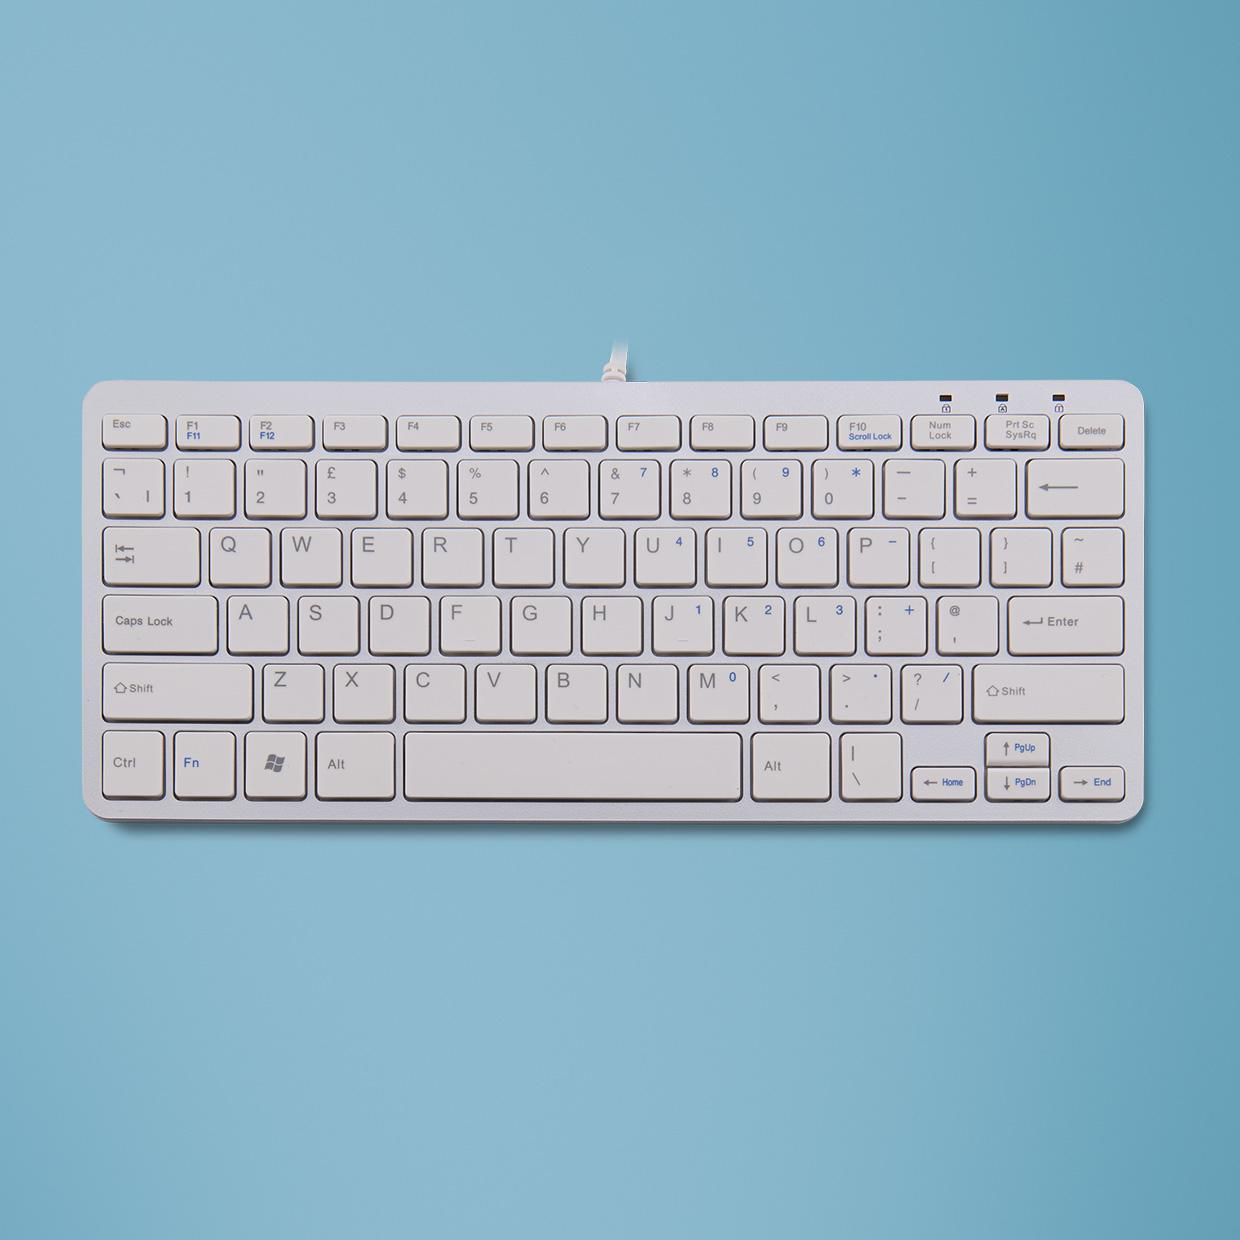 R-Go-Tools RGOECUKW Compact Keyboard, UK, white 